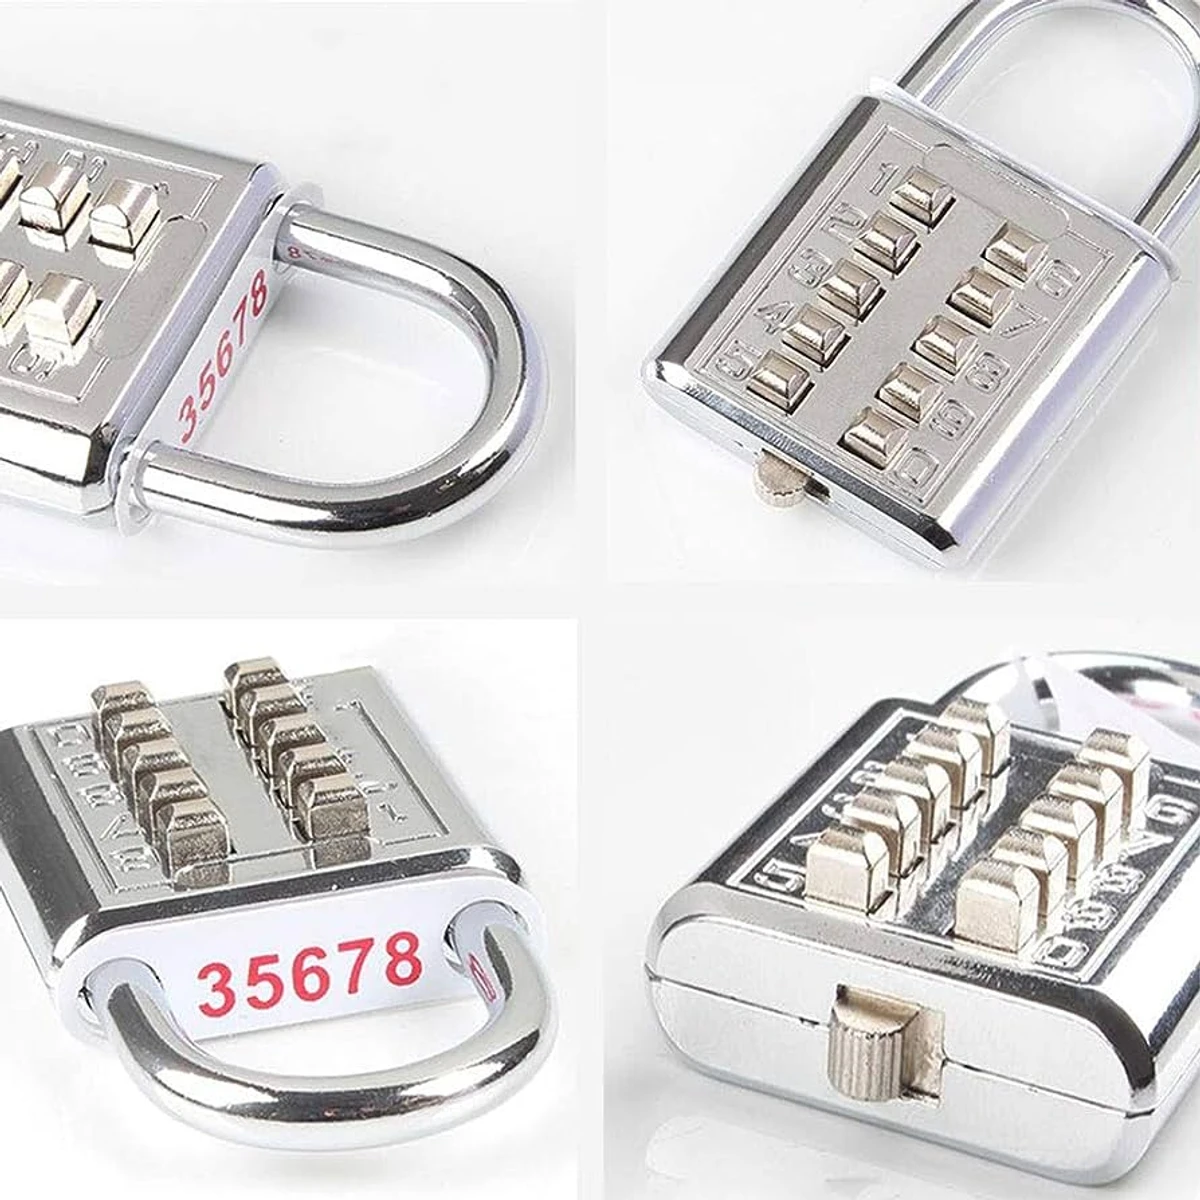 10 Digit Push Button Password Lock Anti-theft Locking Mechanism For Locker